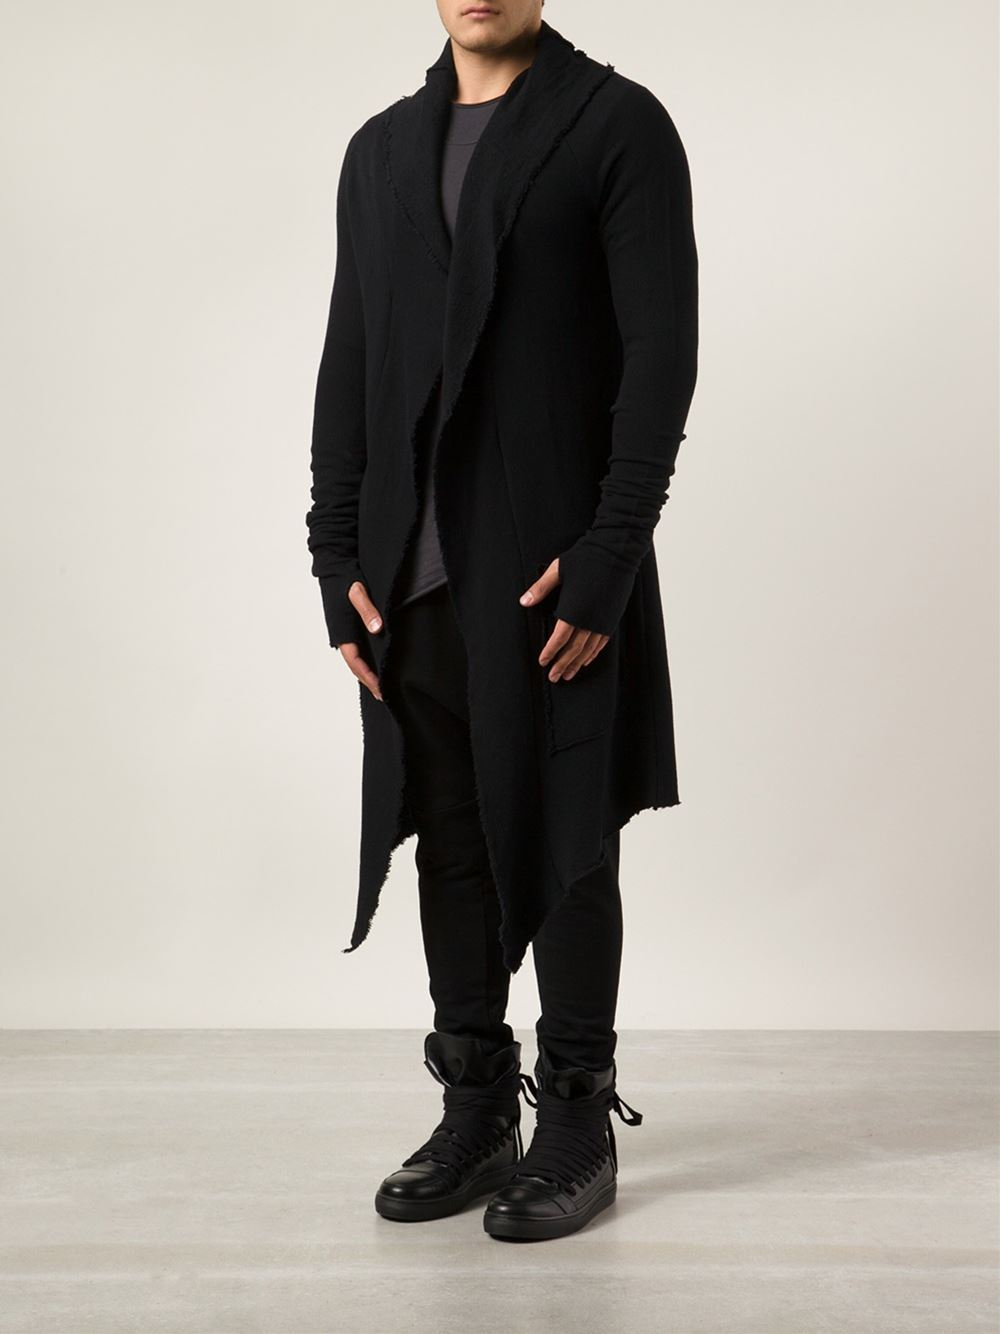 Lyst - Thom krom Long Knit Sweater in Black for Men